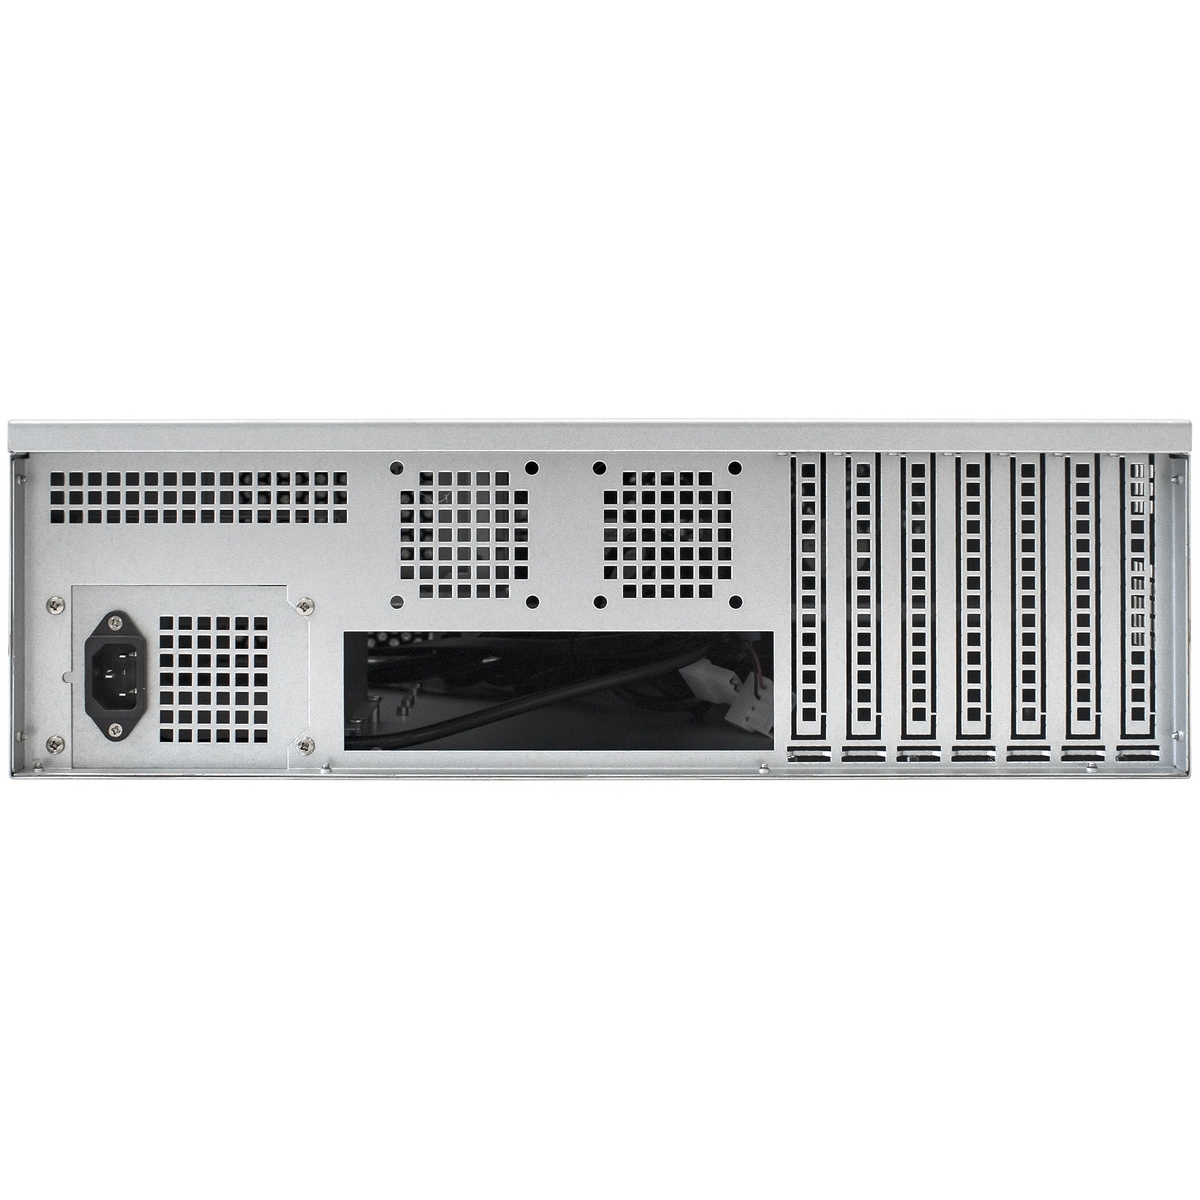 Server case ExeGate Pro 3U450-09/700ADS